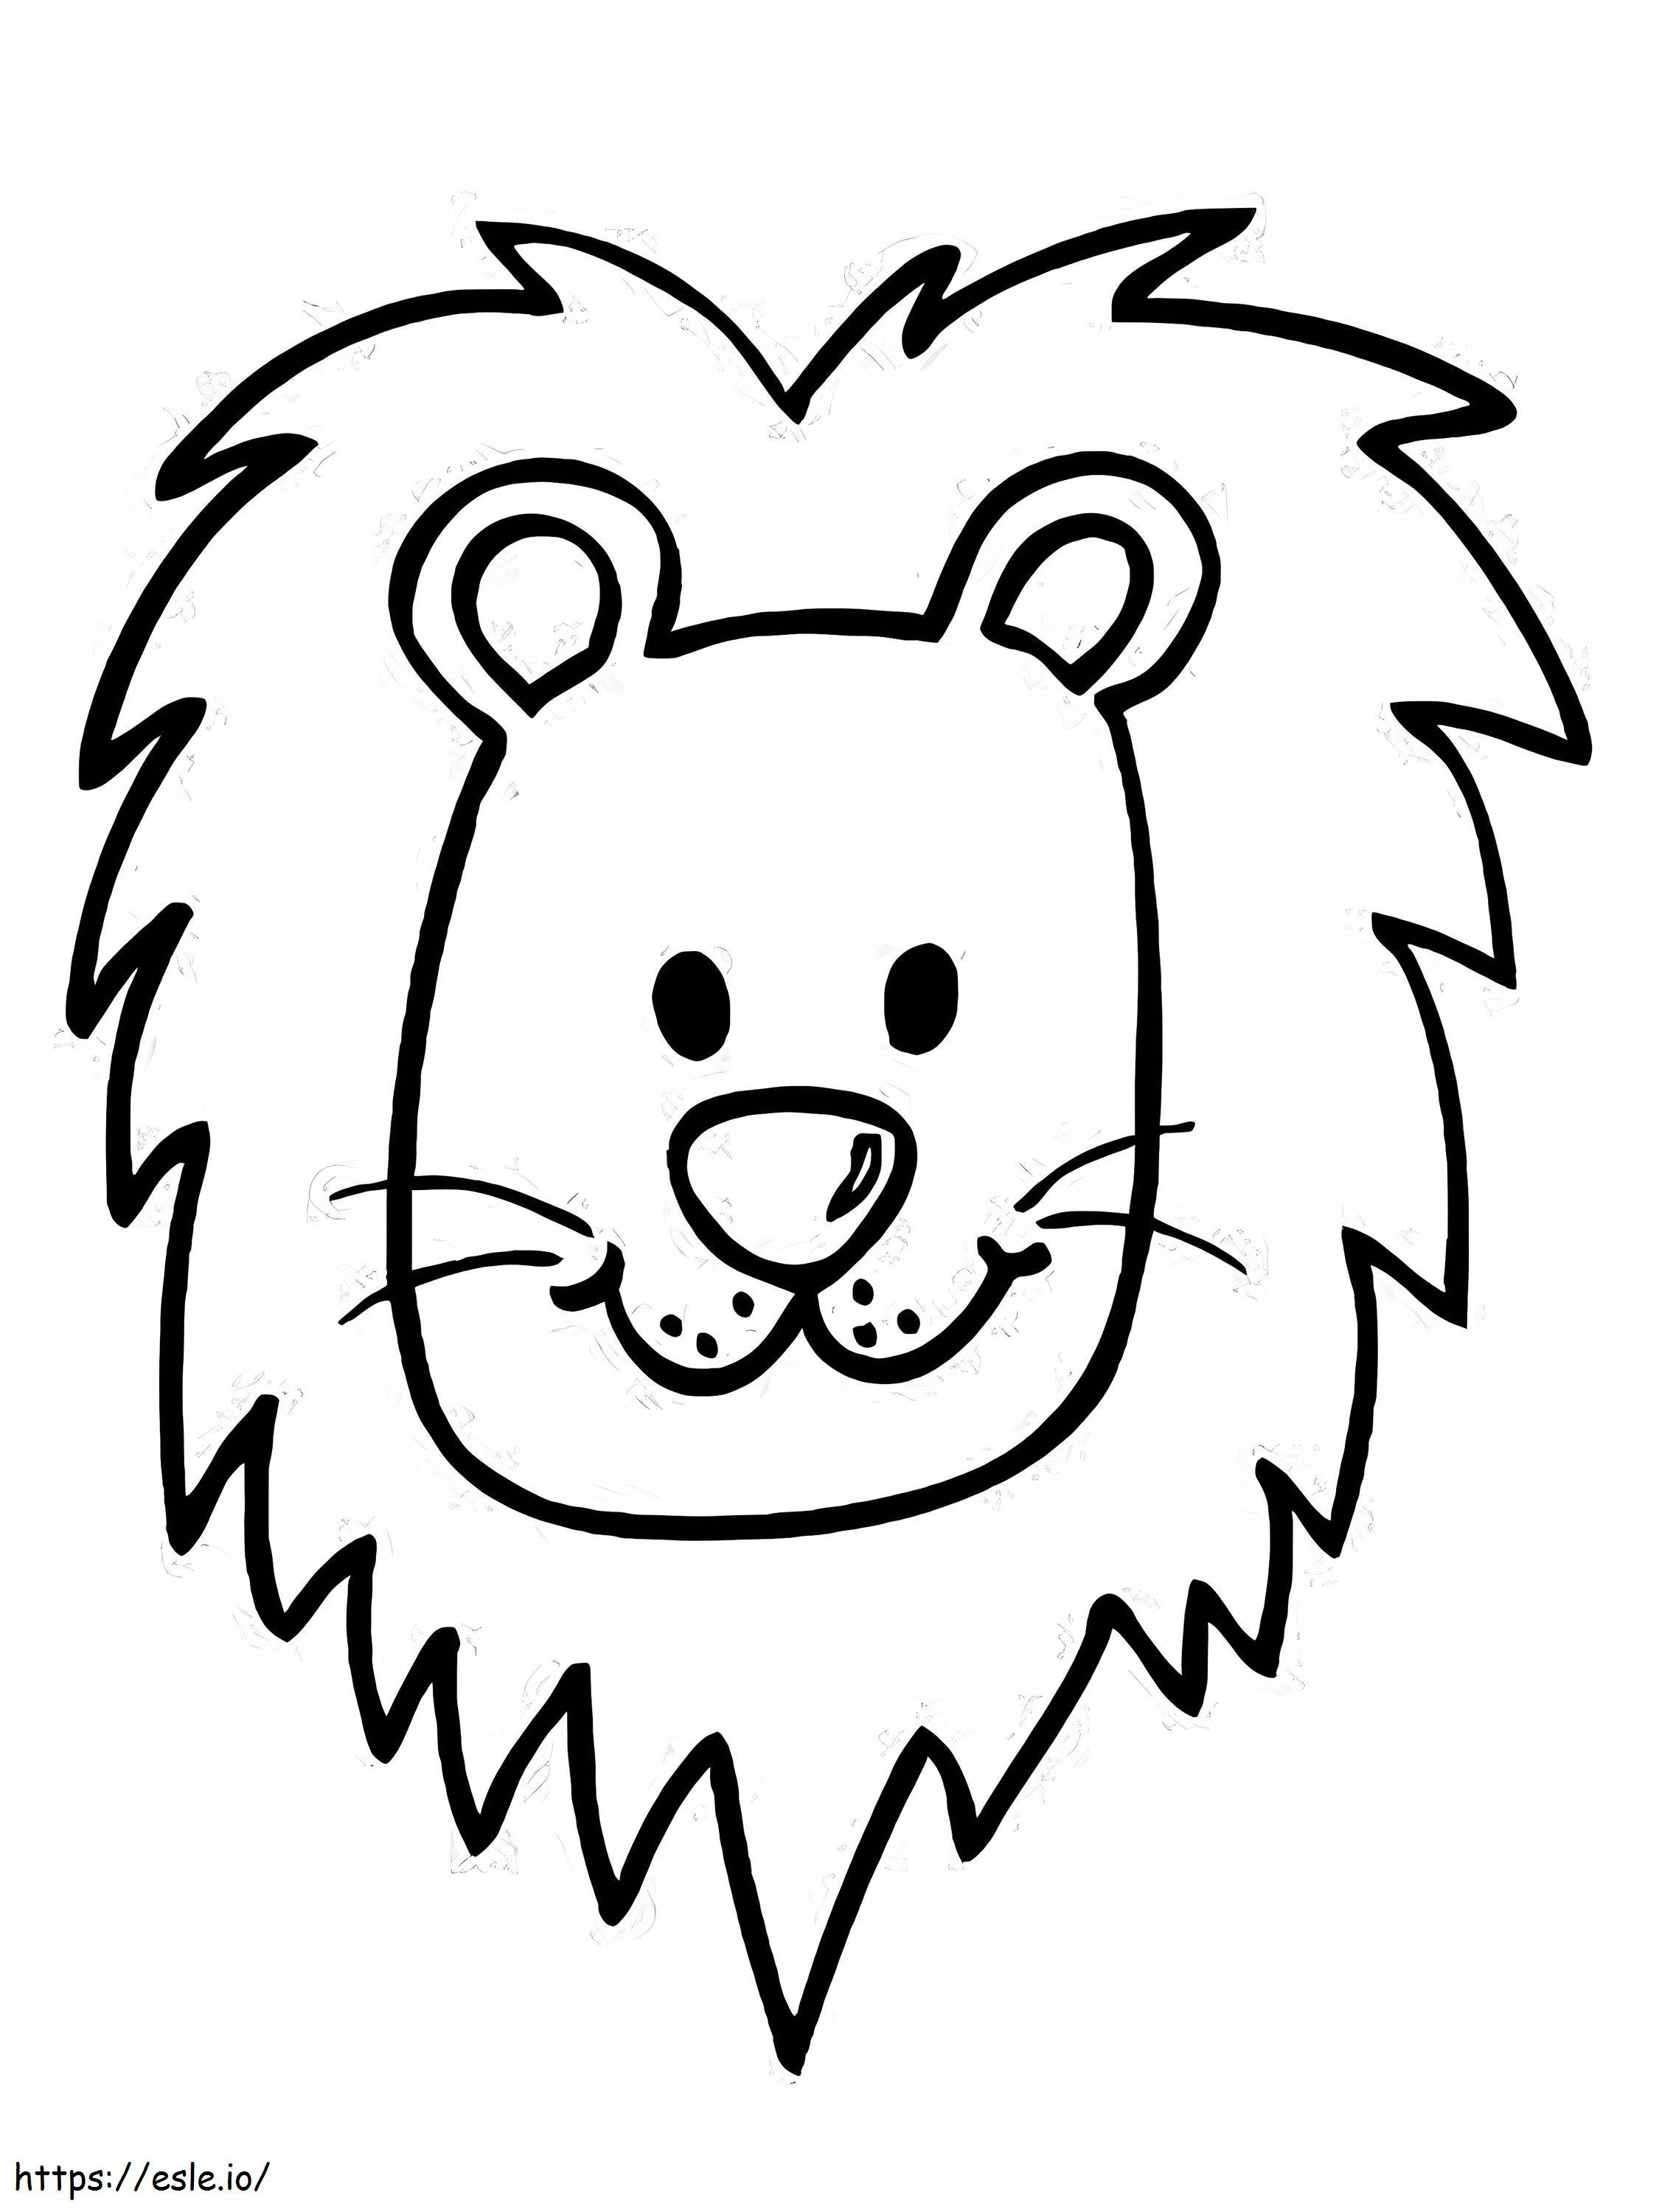 Cara de león sonriente para colorear